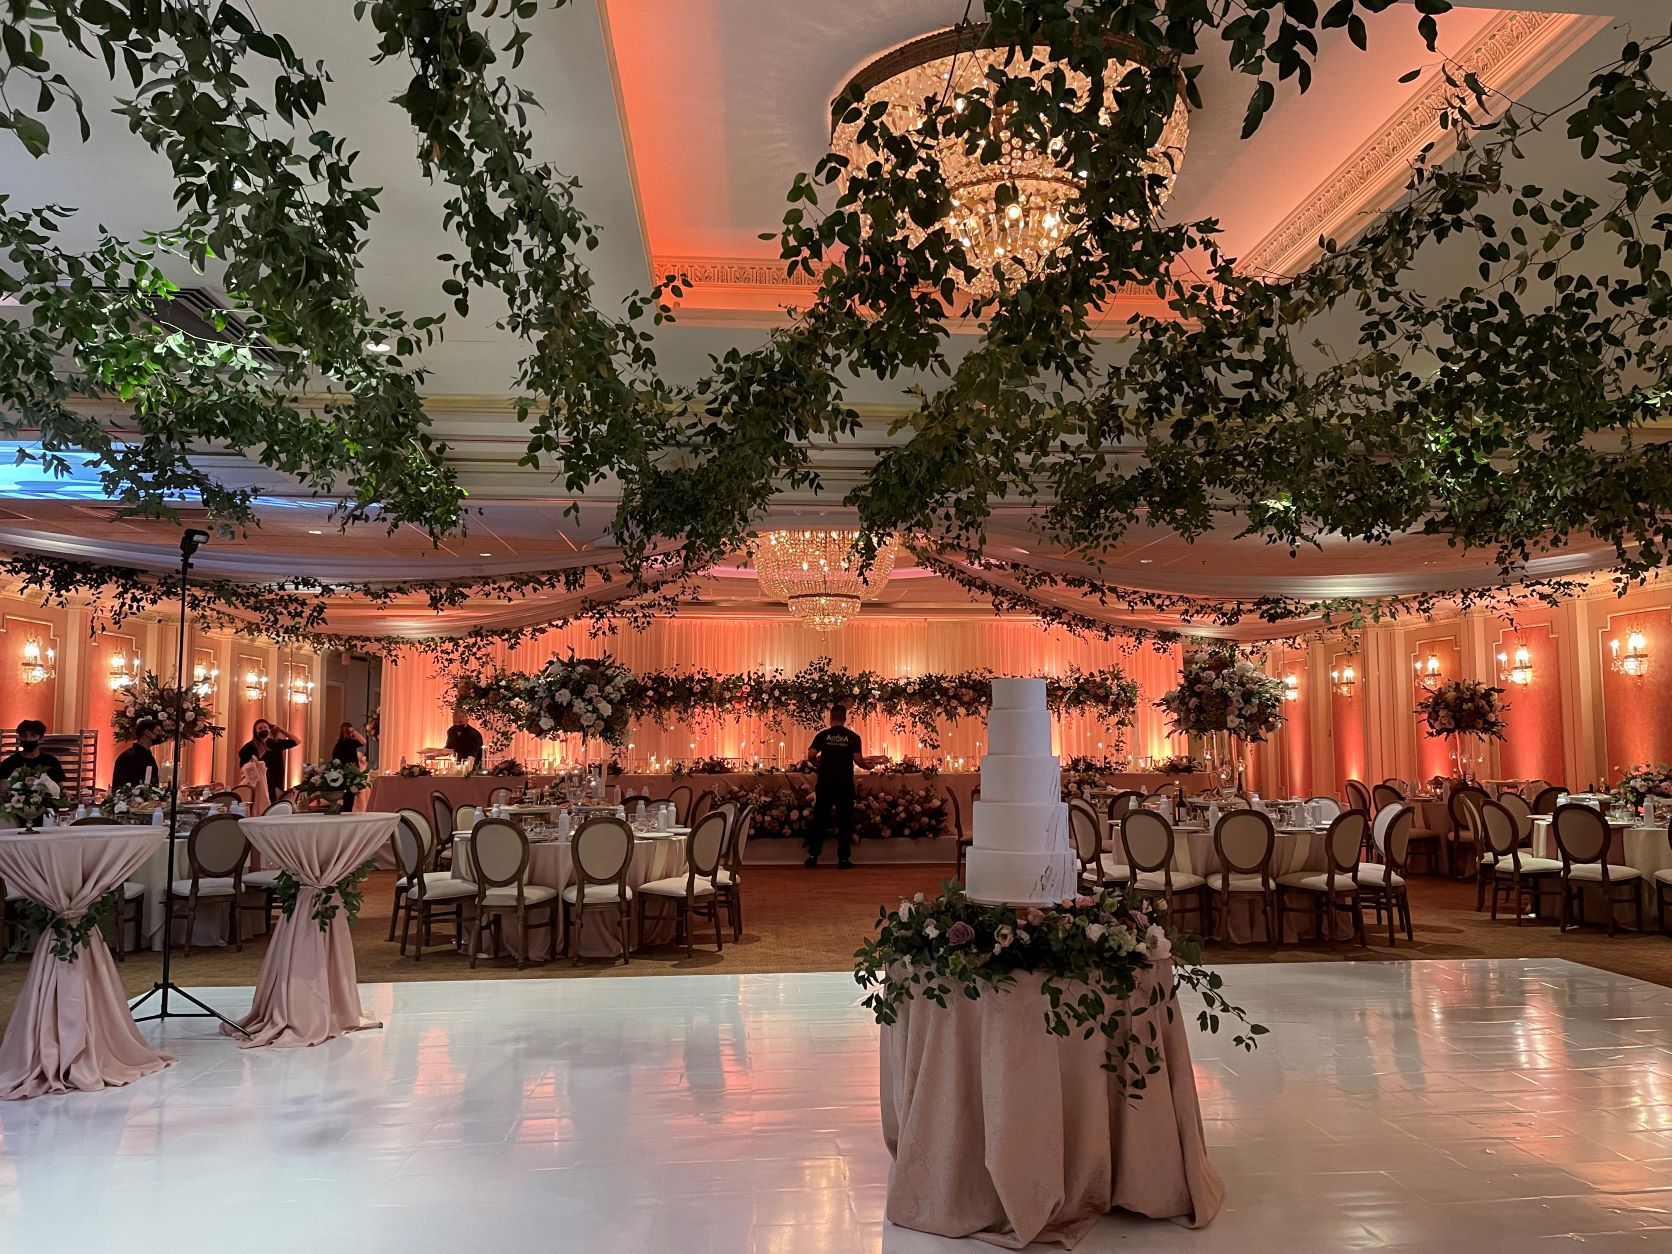 Astoria Banquets wedding ceremony and reception. Best of Chicago wedding venues.